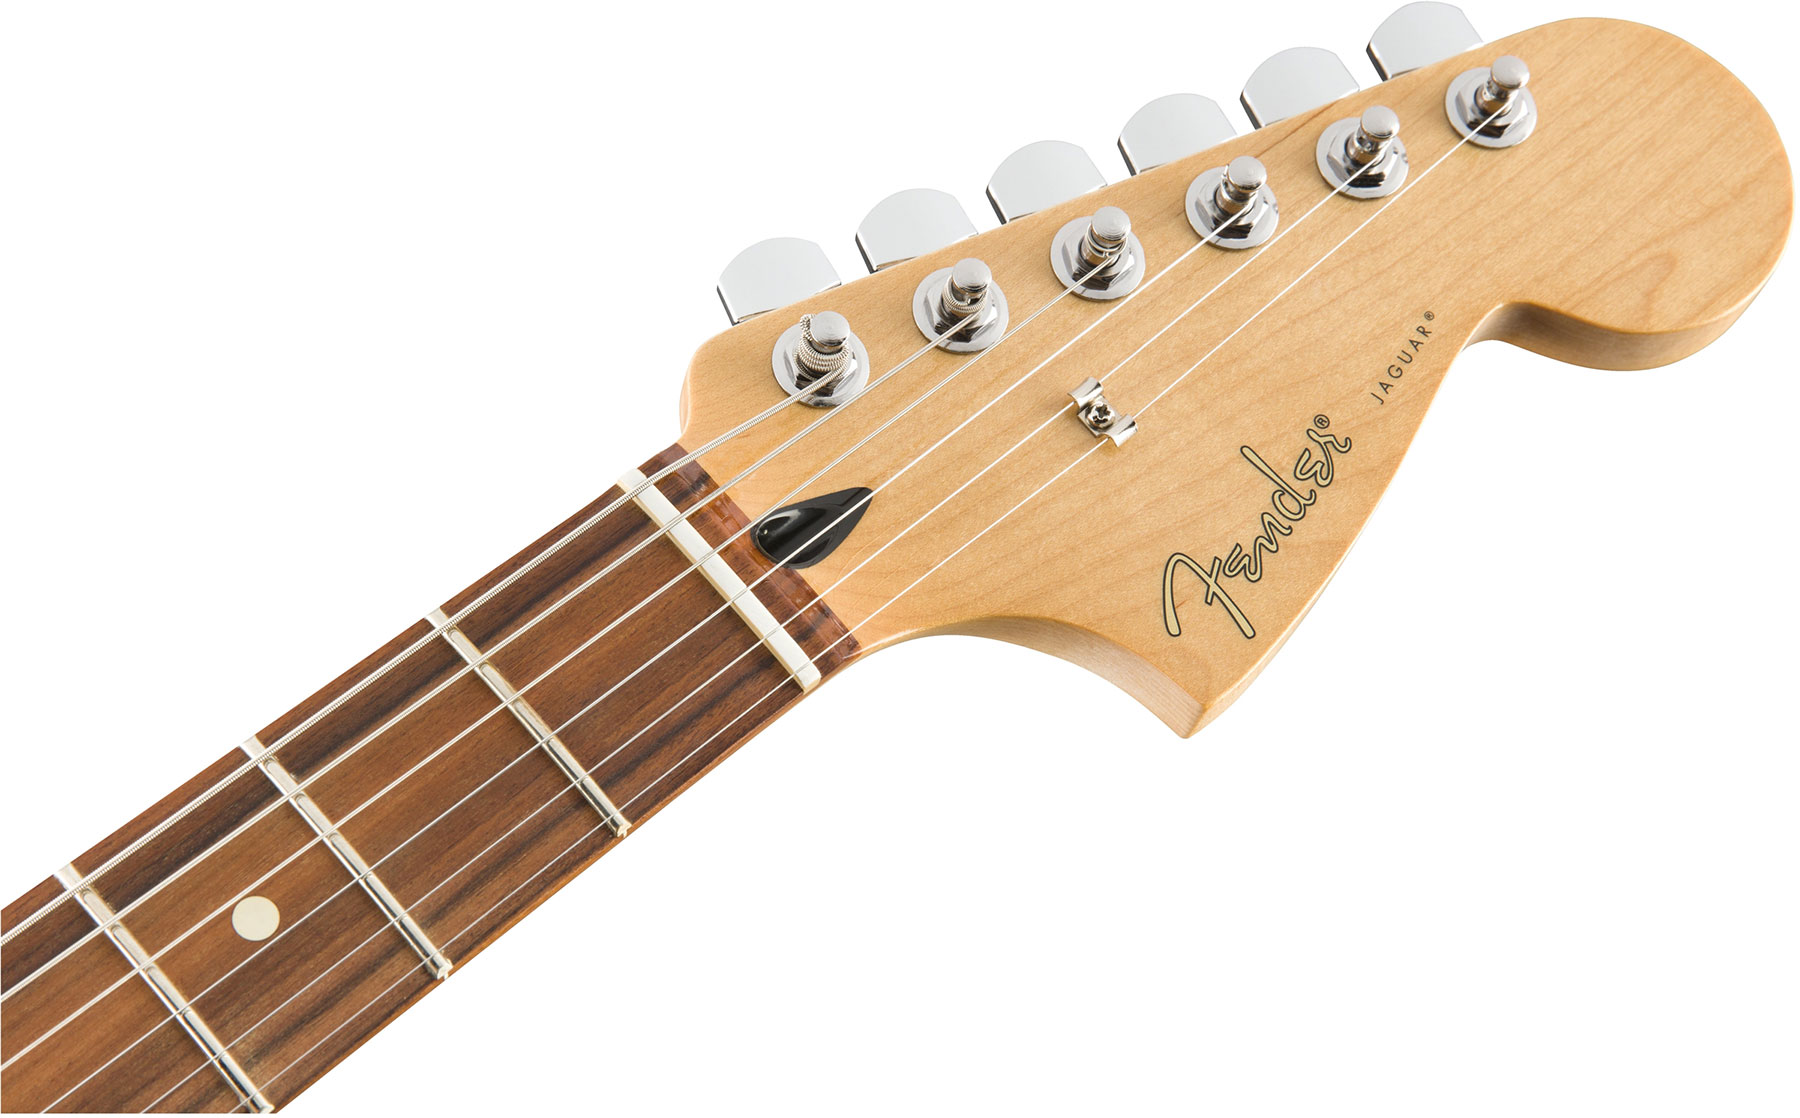 Fender Jaguar Player Mex Hs Trem Pf - Tidepool - Guitarra electrica retro rock - Variation 3